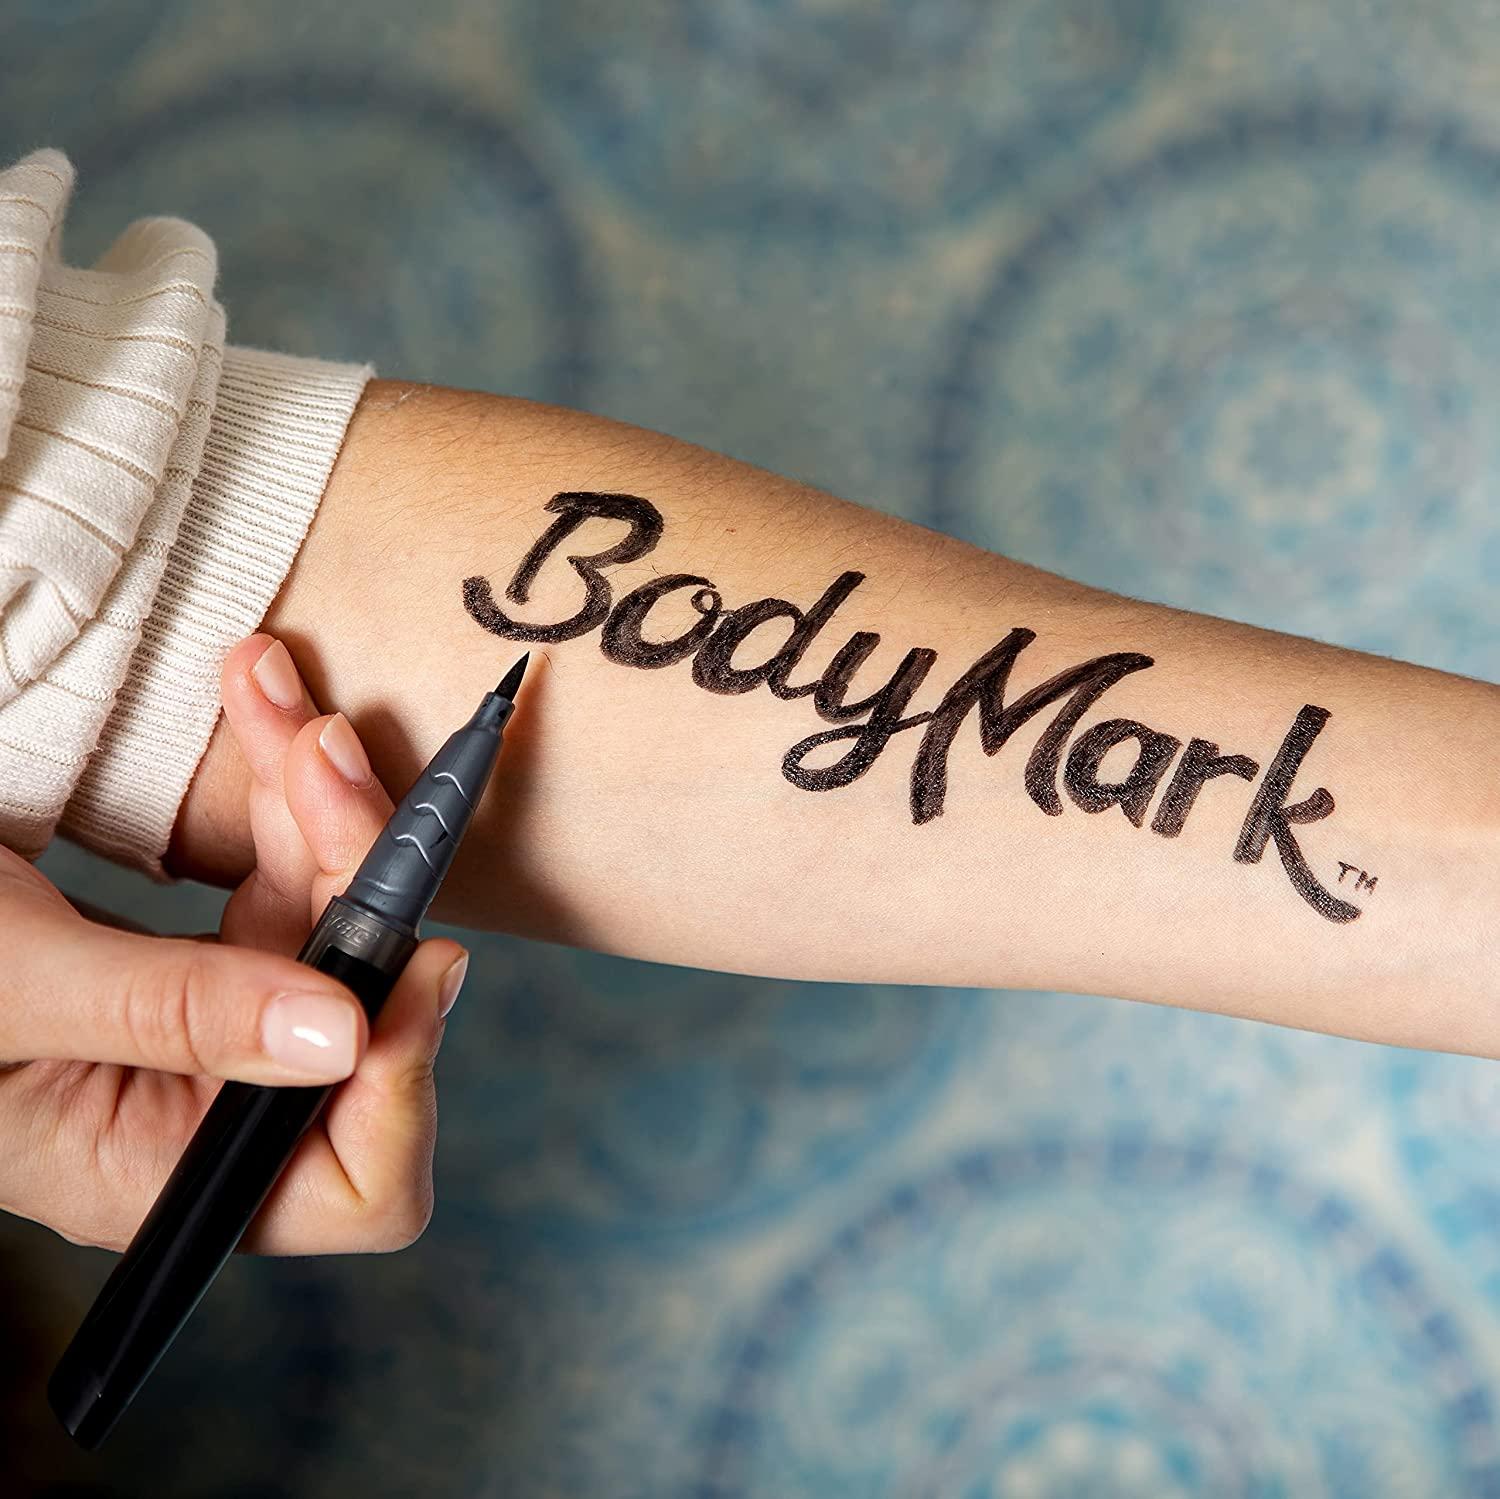 BIC BodyMark Temporary Tattoo Markers for Skin, India